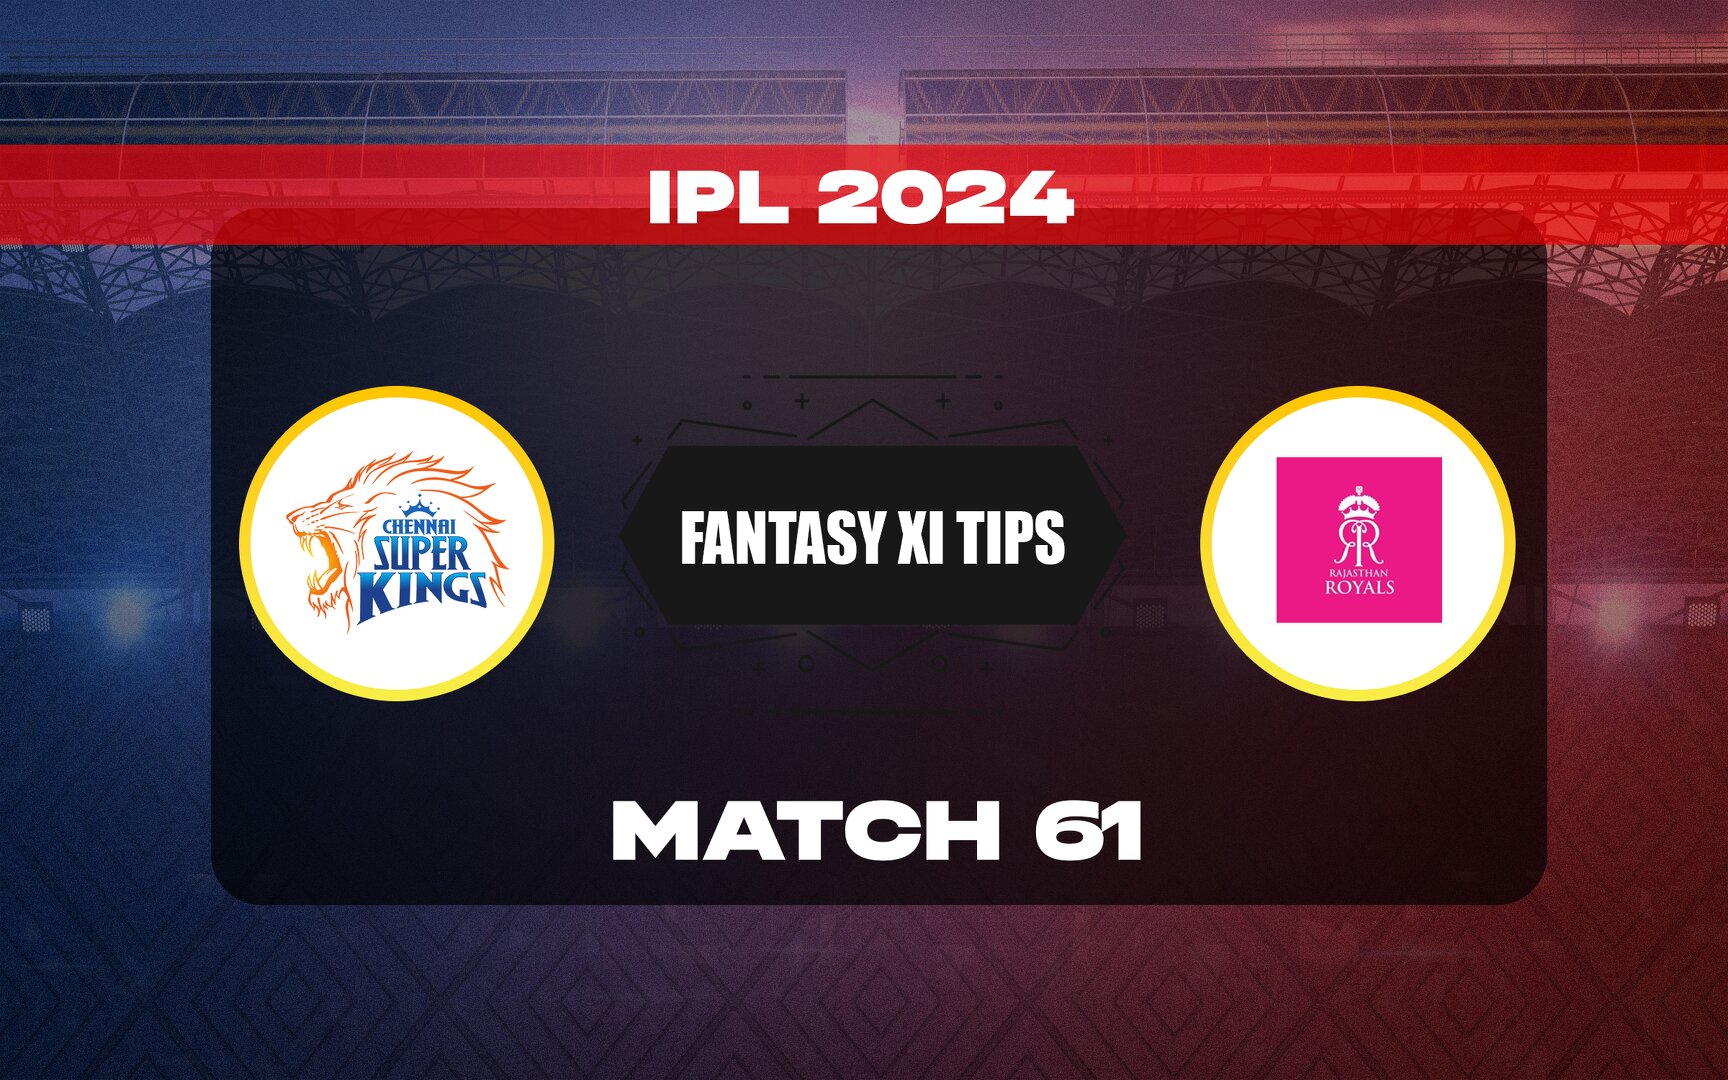 CHE vs RR Dream11 Prediction, Dream11 Playing XI, Today Match 61, IPL 2024